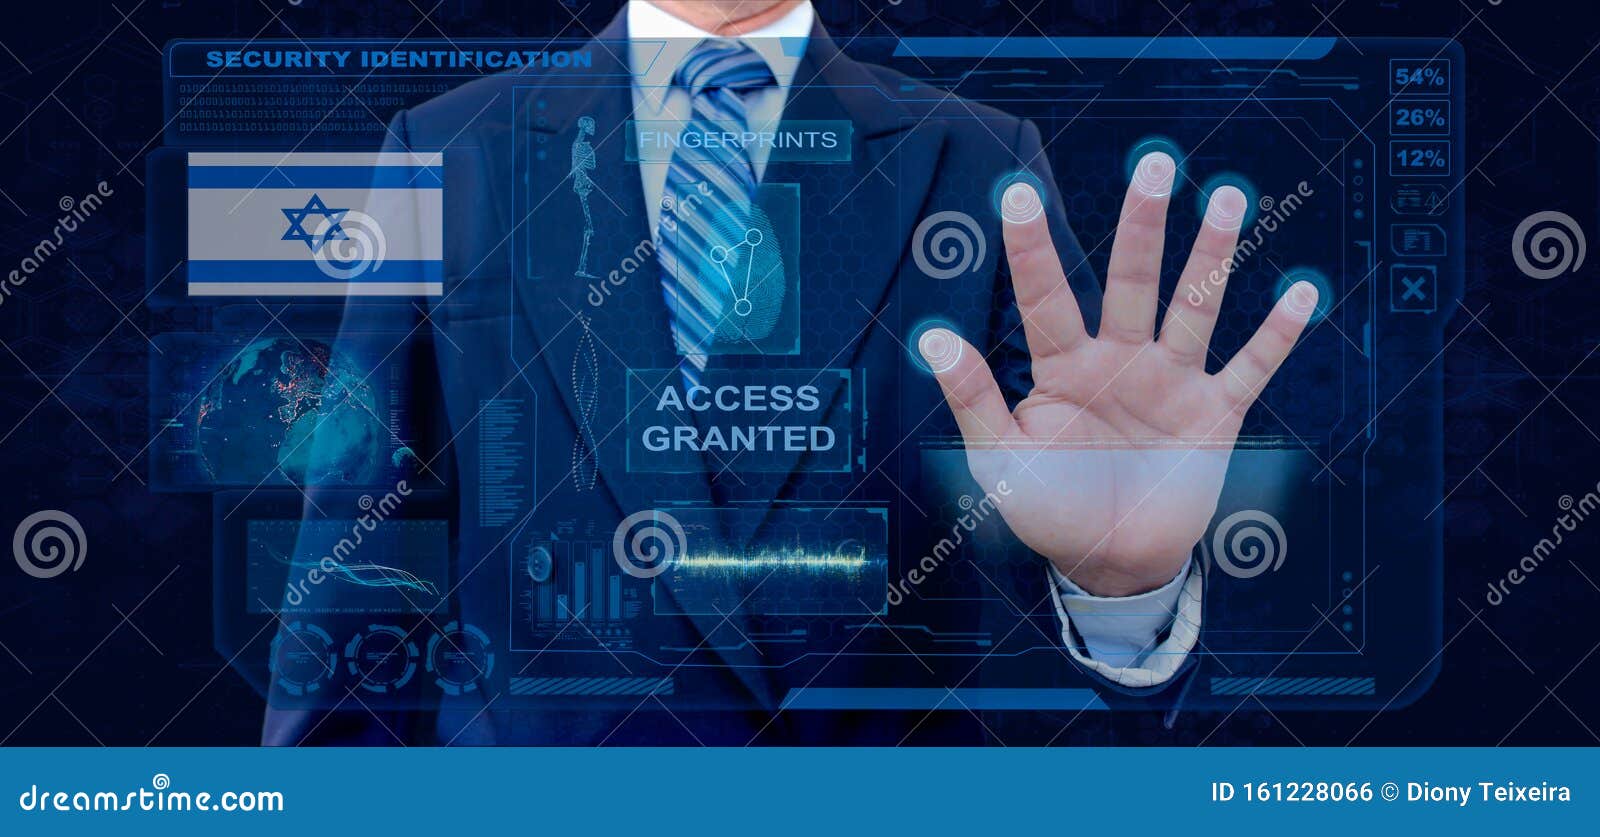 finger print biometric scanning identification system. businessman scan fingerprint biometric identity and approval. israel